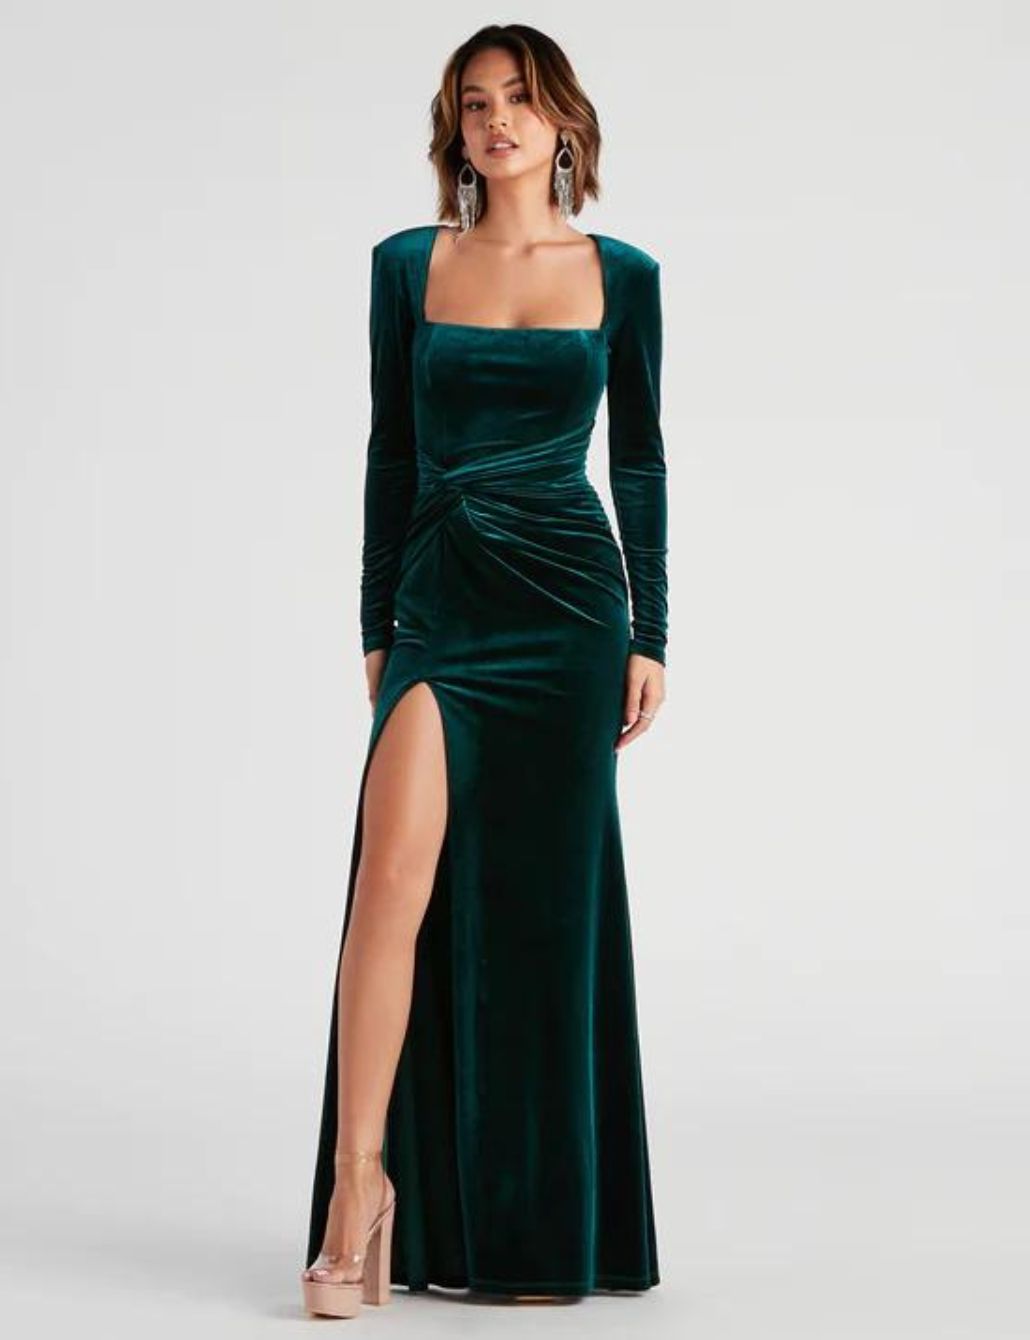 Velvet Dress Womens Long Sleeve Long Maxi Dress Cocktail Party Ball Gown  Dresses | eBay